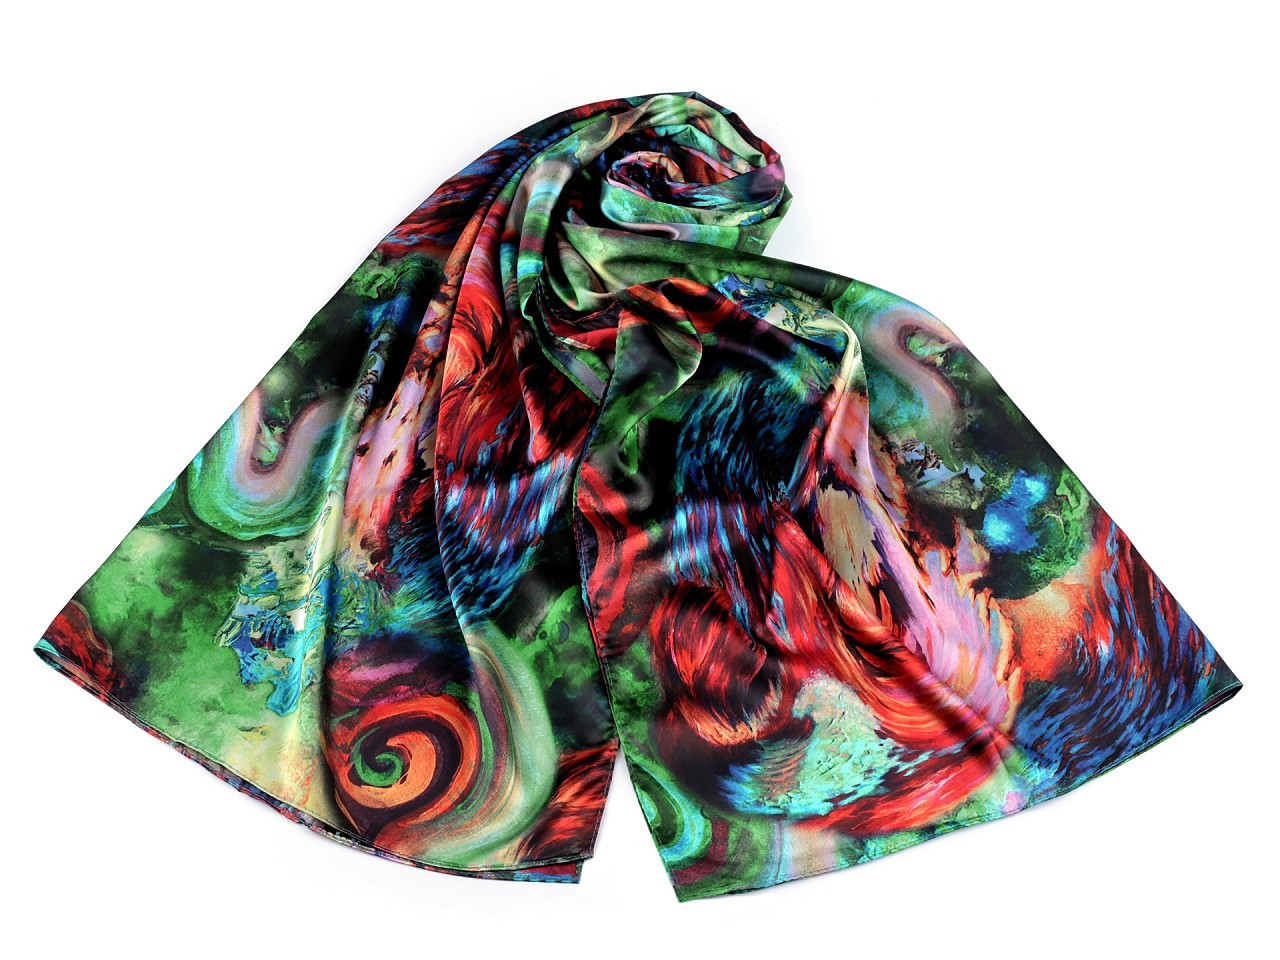 Saténový šátek / šála 70x165 cm, barva 16 multikolor